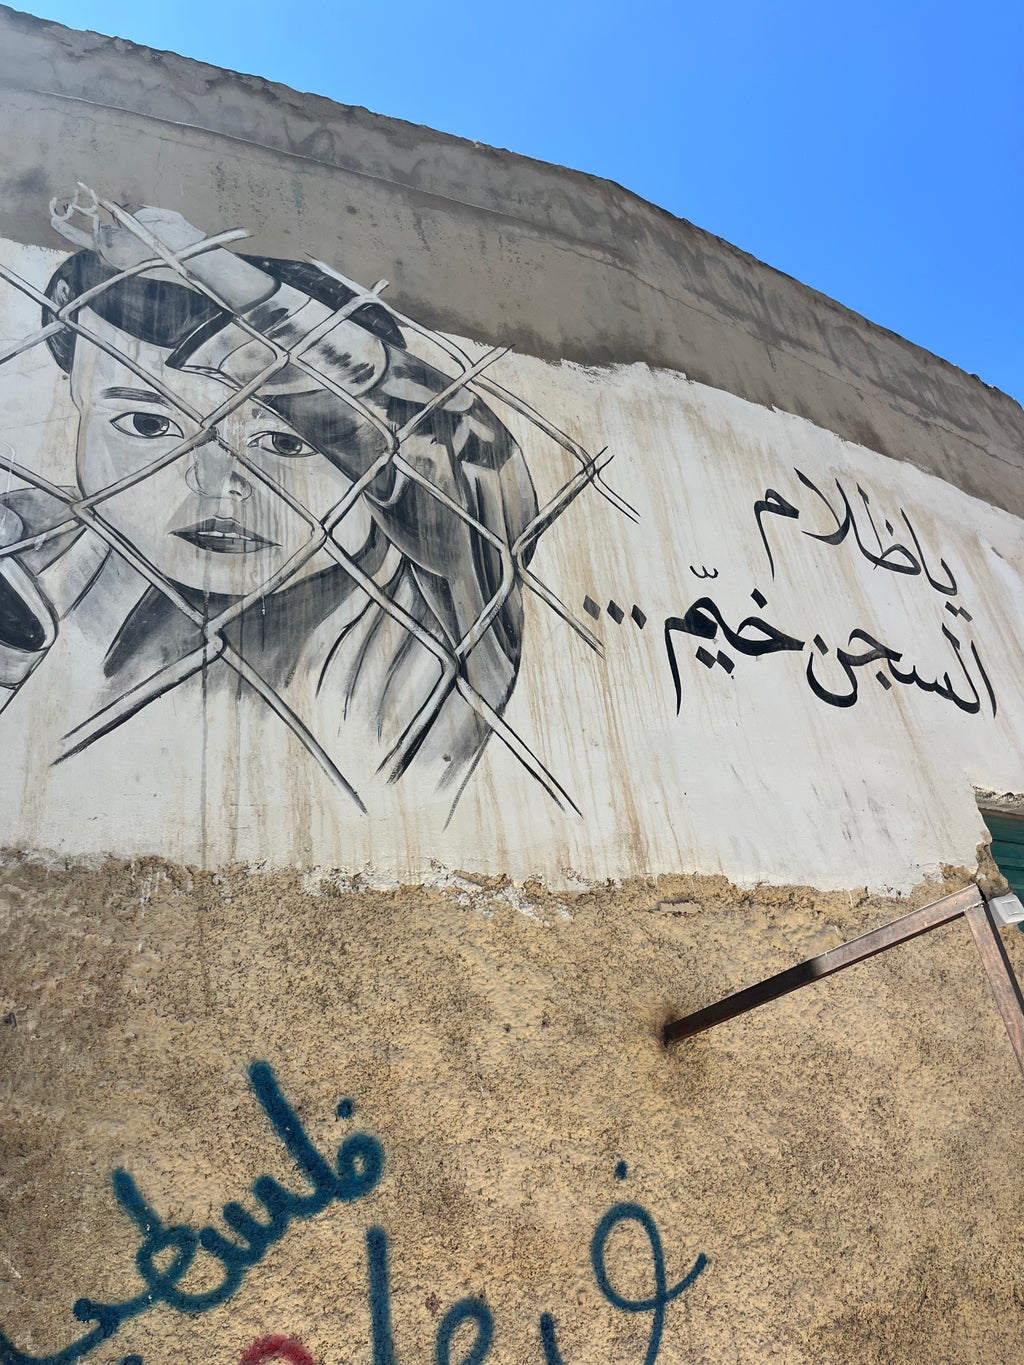 Art from a refugee camp in Jordan